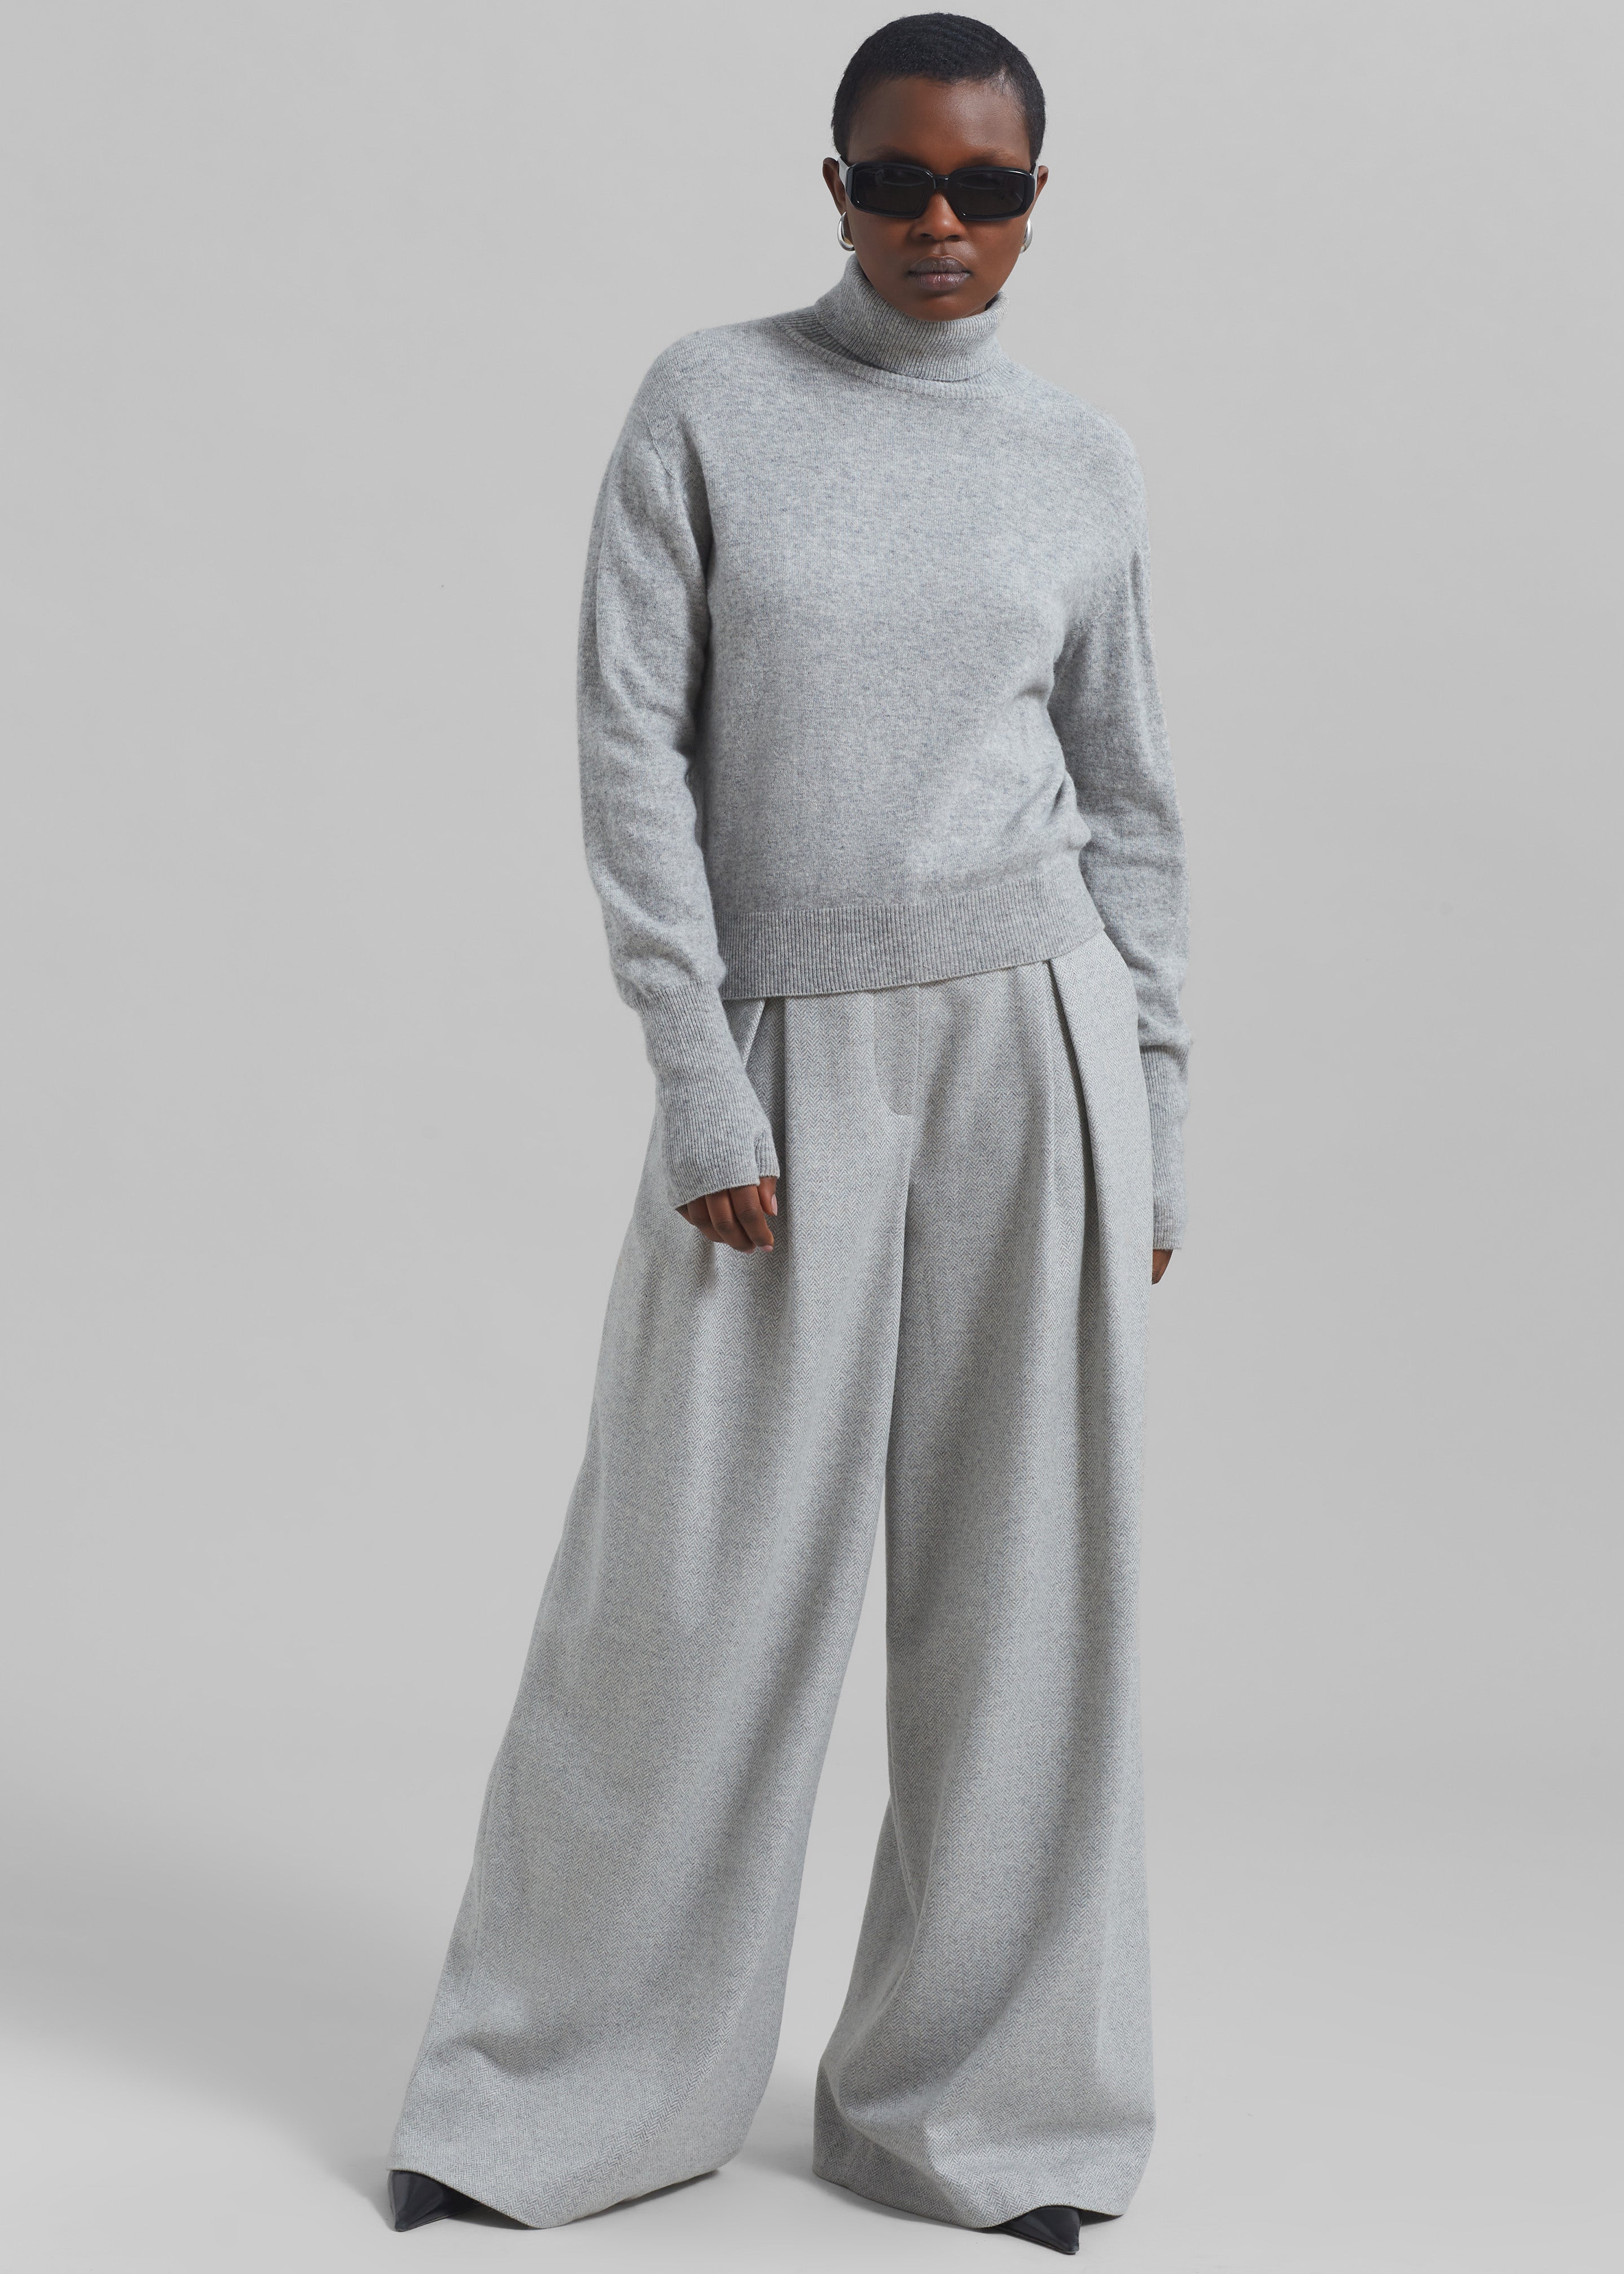 The Garment Trento Pants - Heather Grey Herringbone - 6